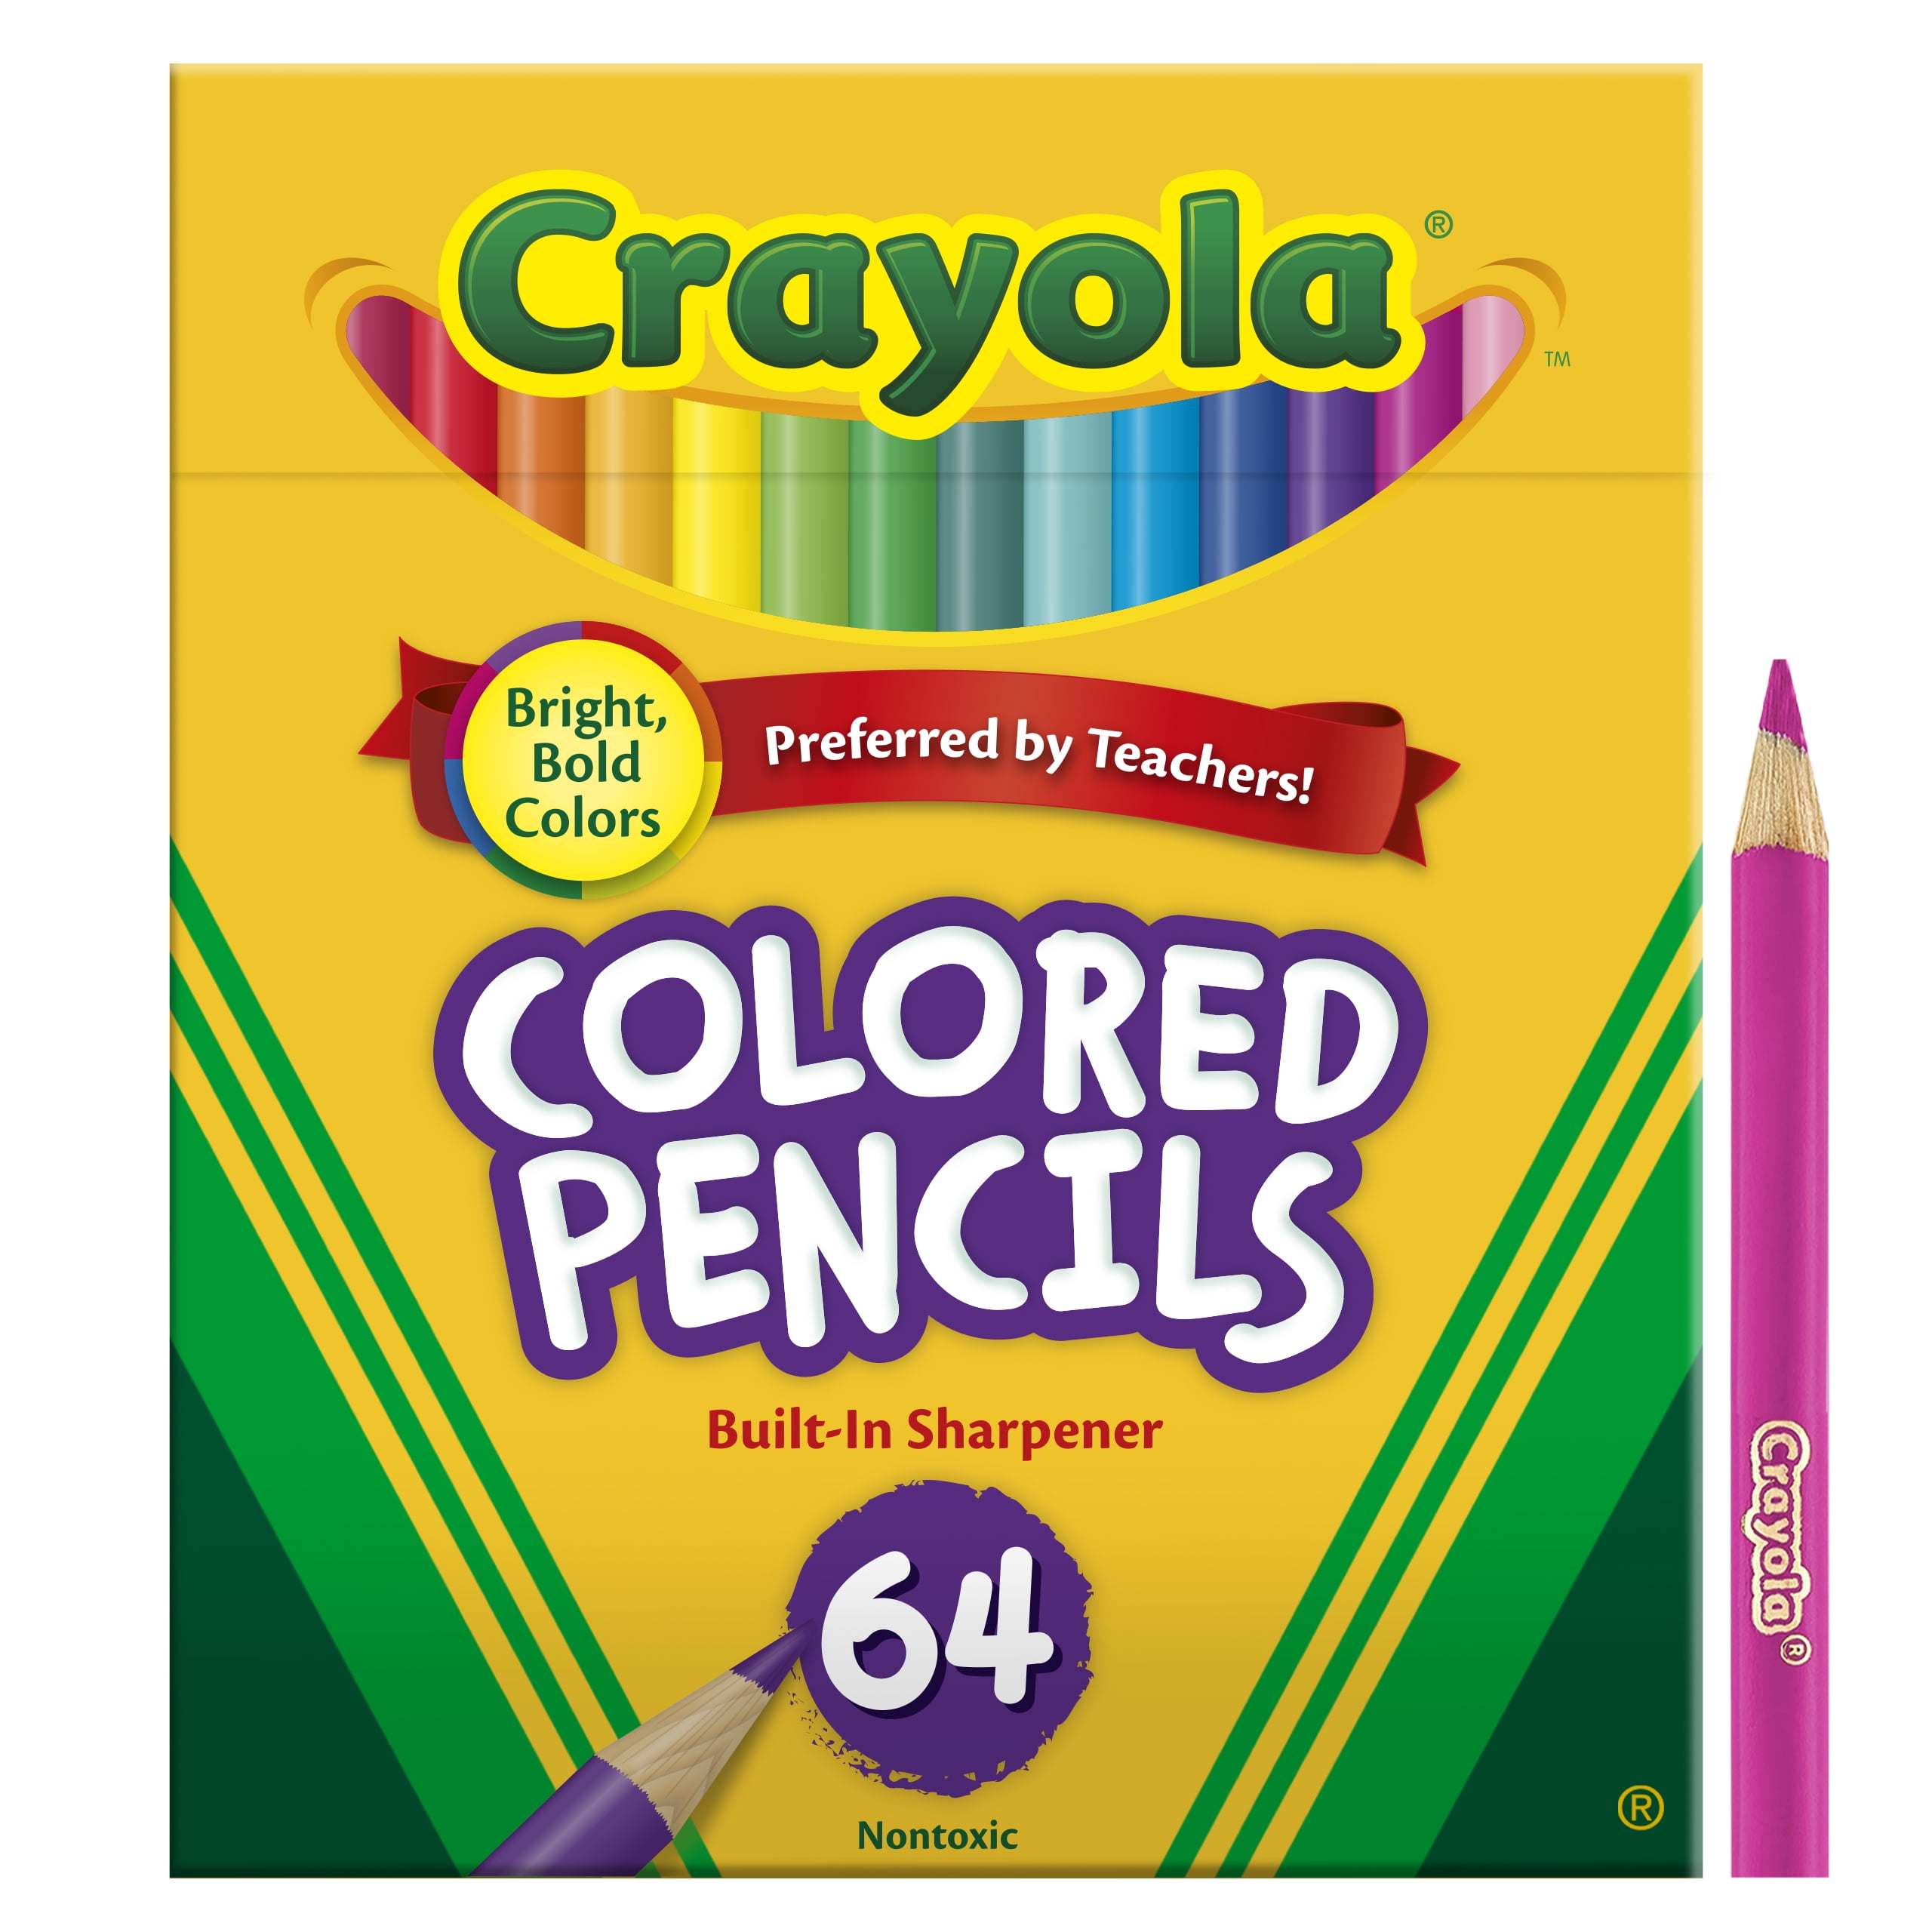 Do colored pencils age?